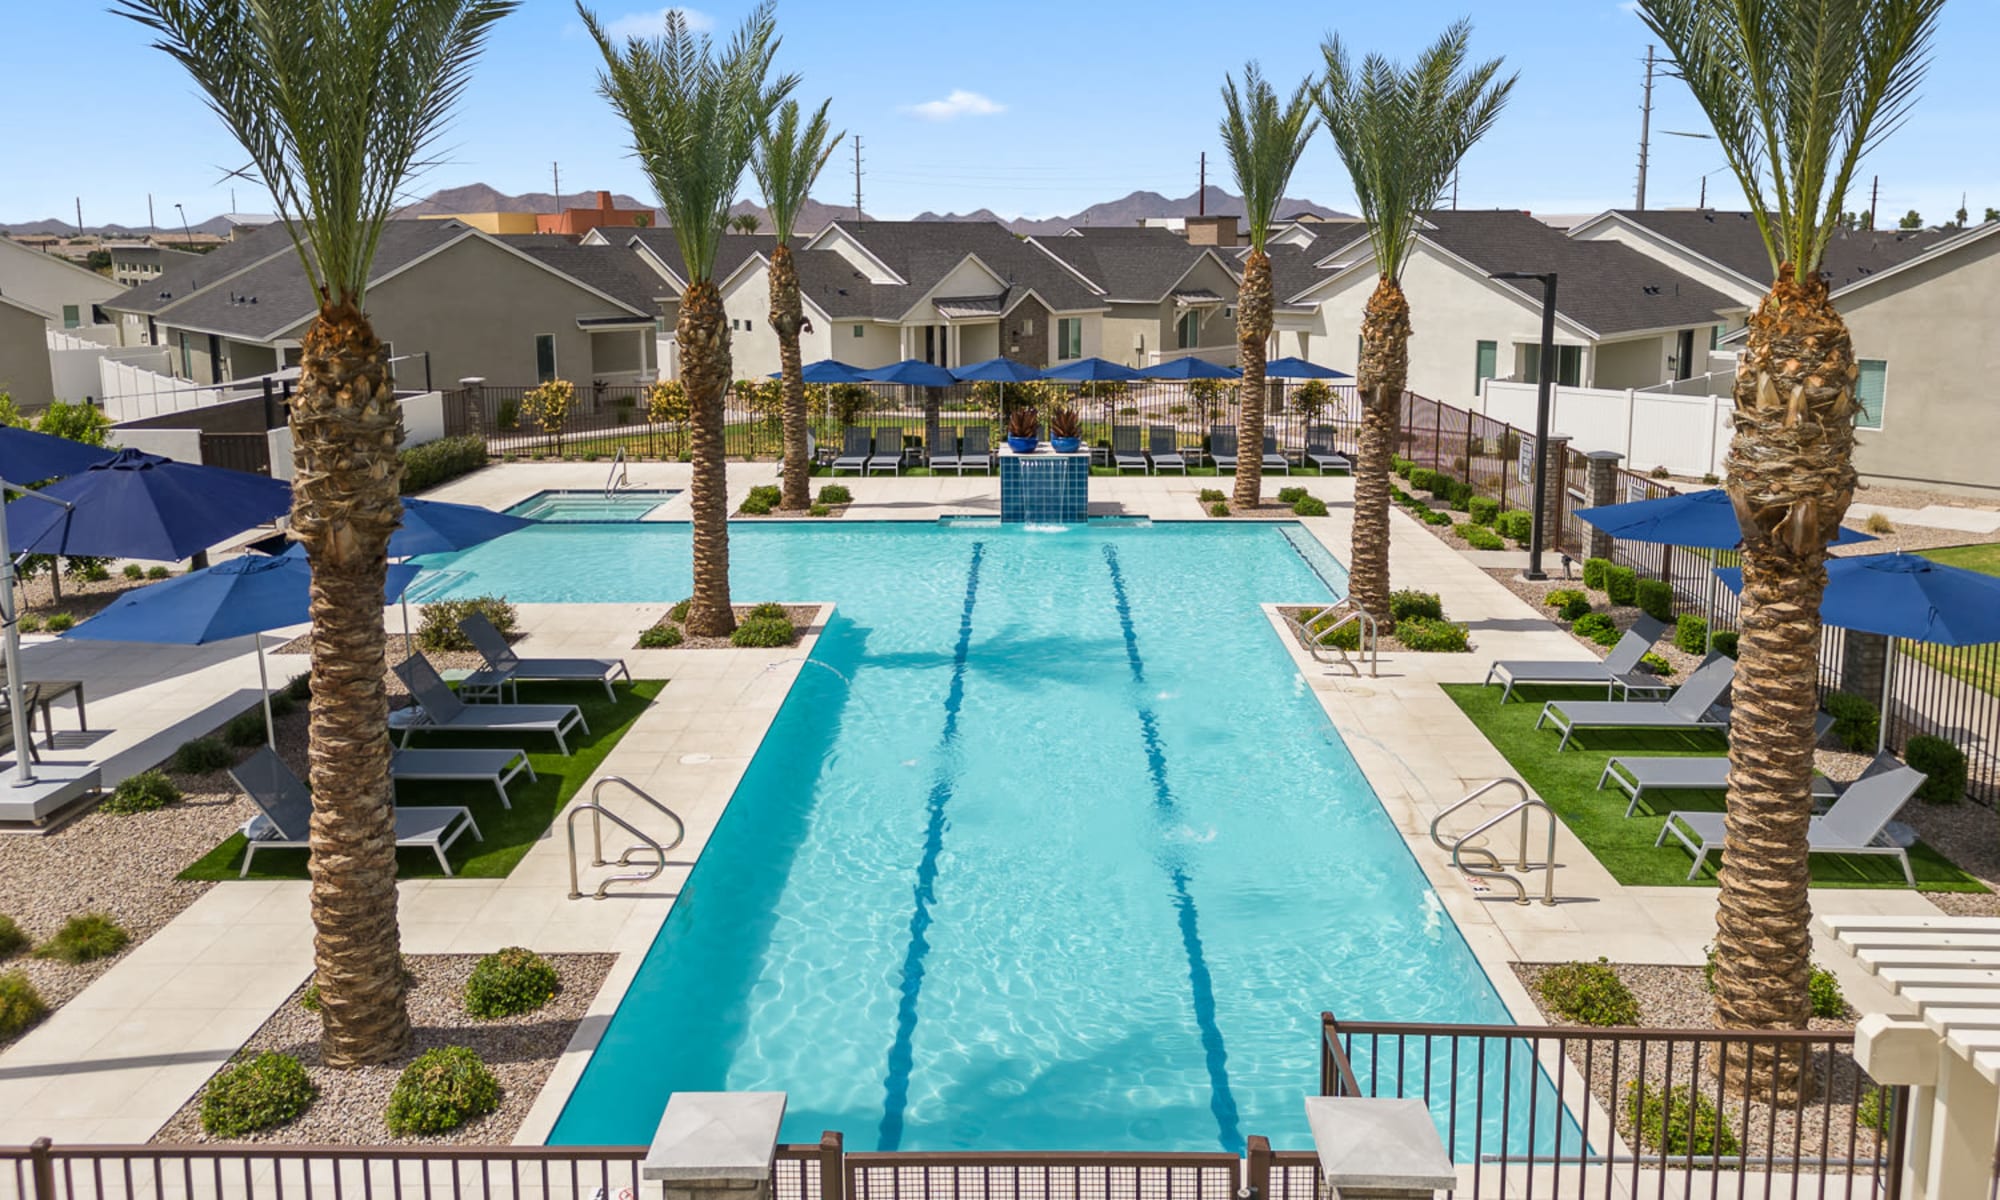 Resort-style pool at EVR Spur Cross in Queen Creek, Arizona